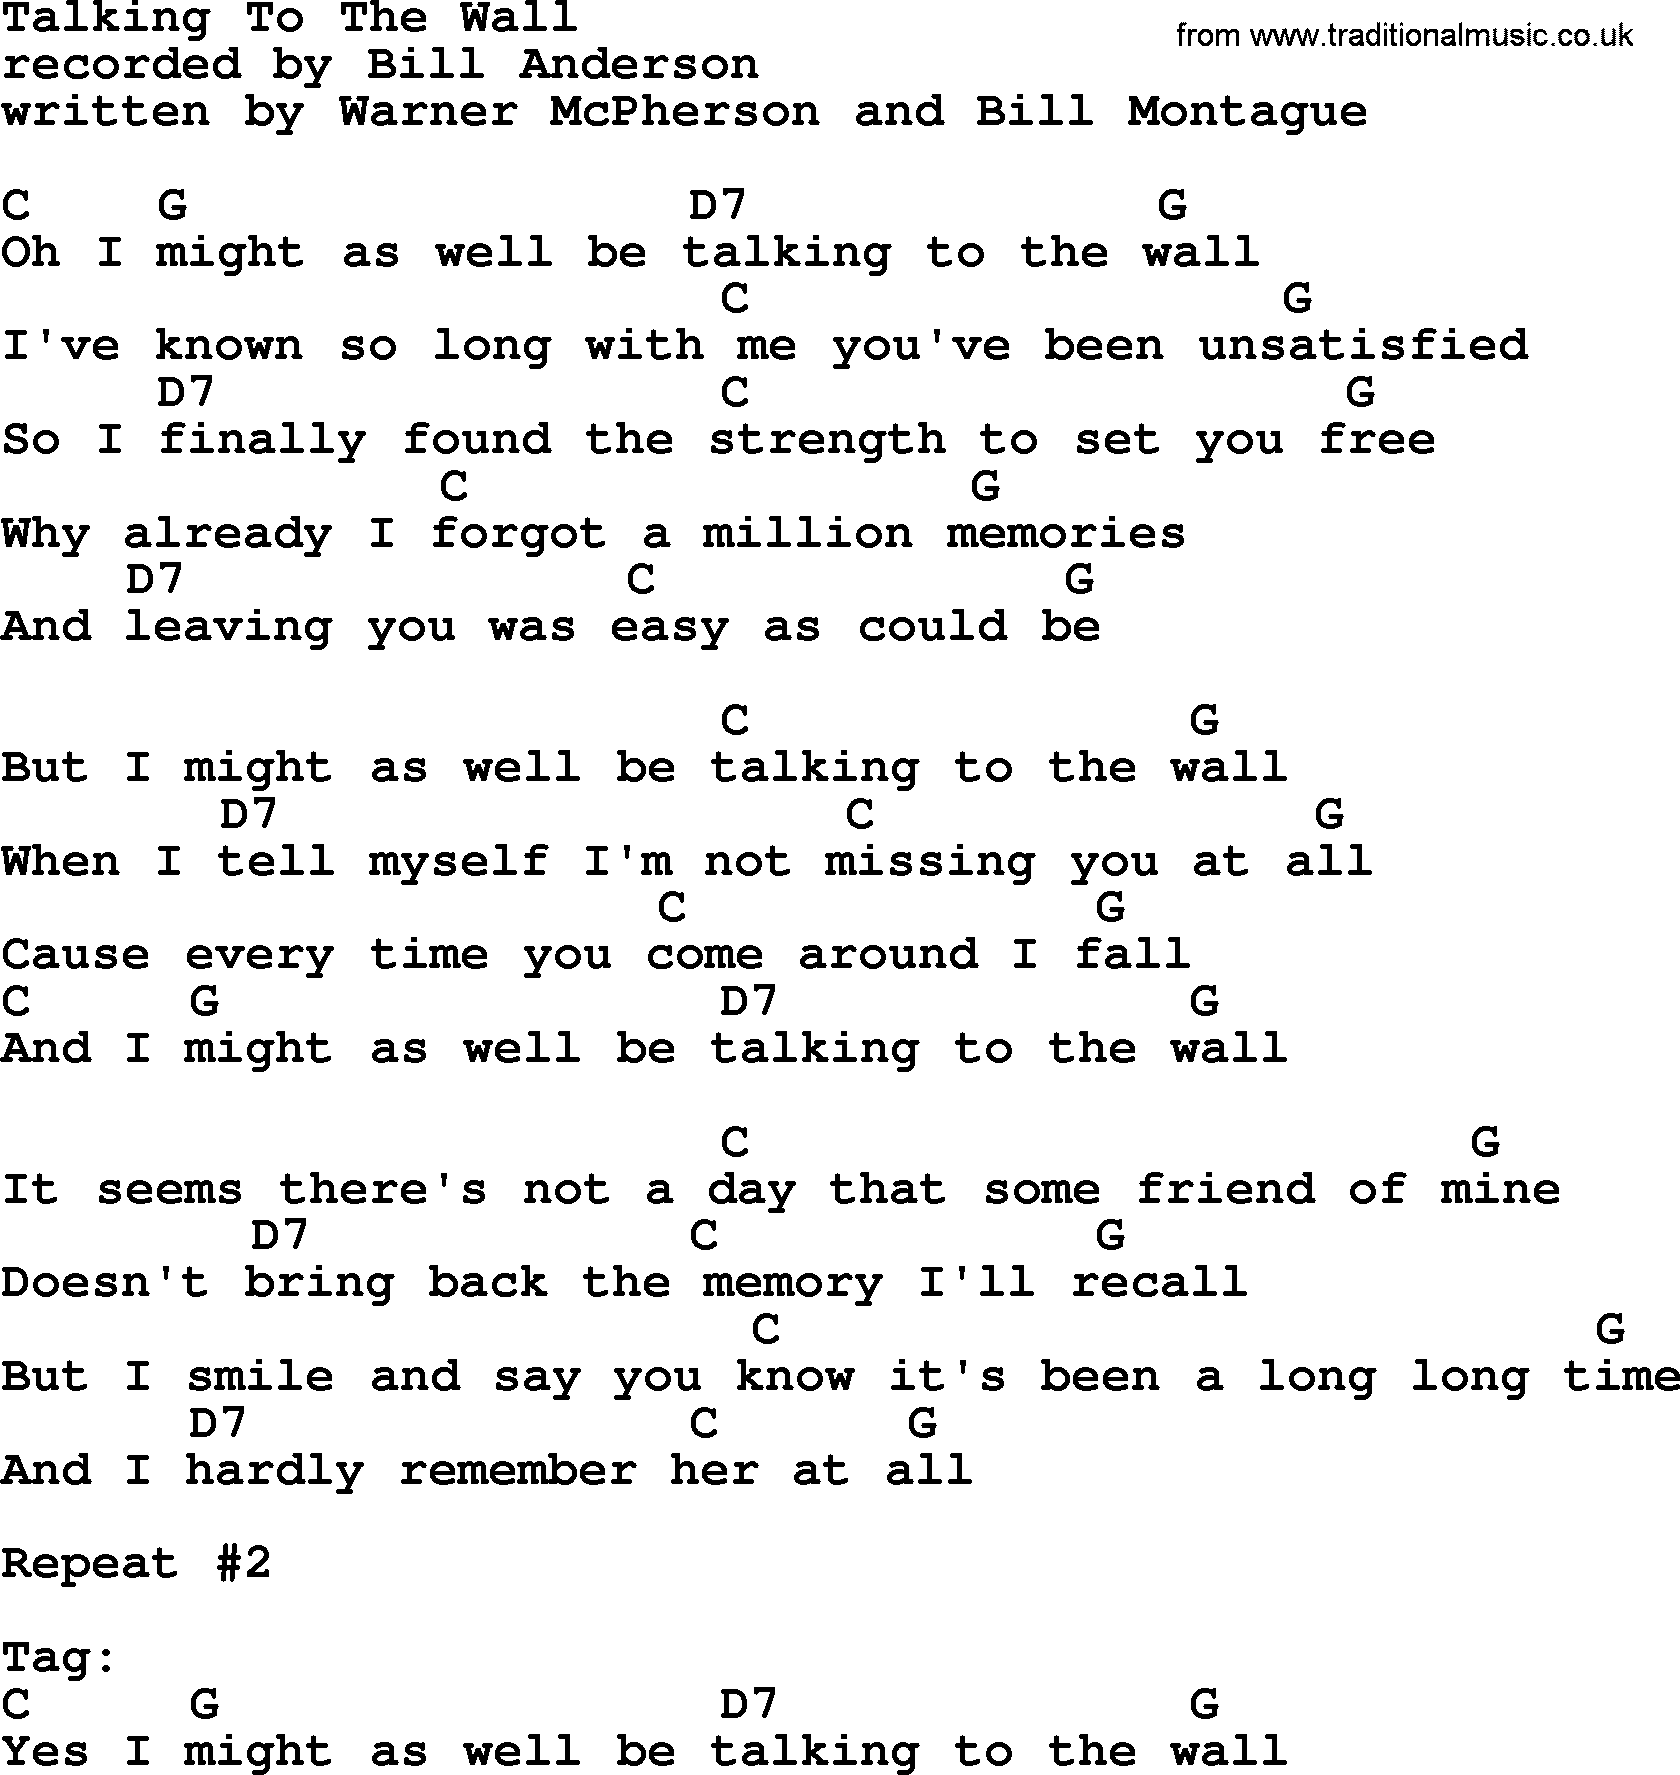 Loretta Lynn song: Talking To The Wall lyrics and chords